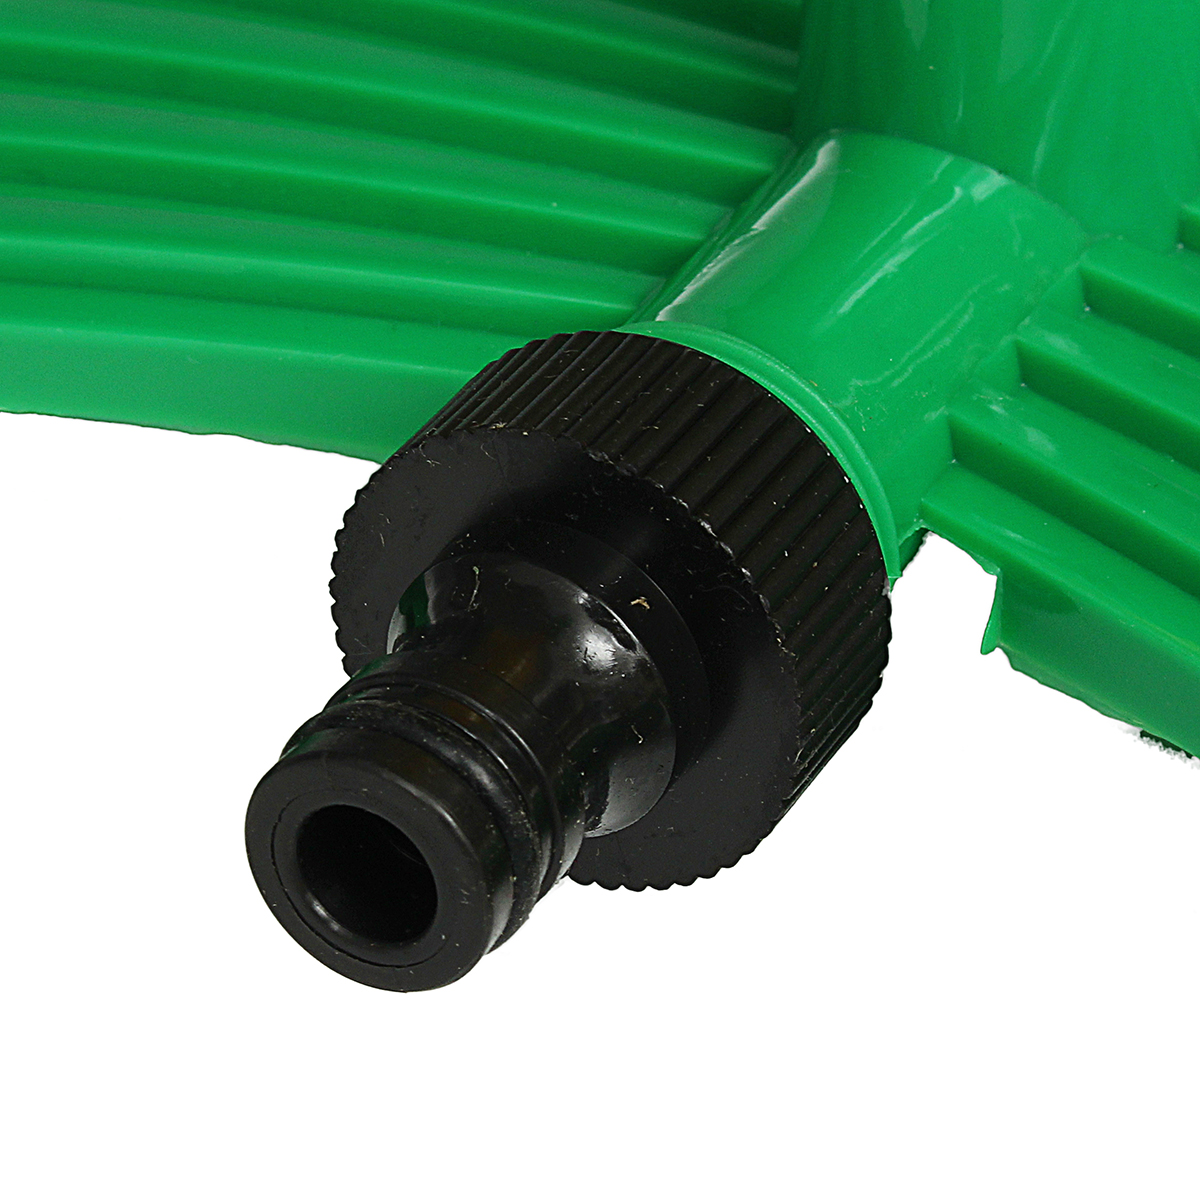 Rotating-Impulse-Sprinkler-Garden-Lawn-Grass-Watering-System-Water-Hose-Sprayer-1478934-9